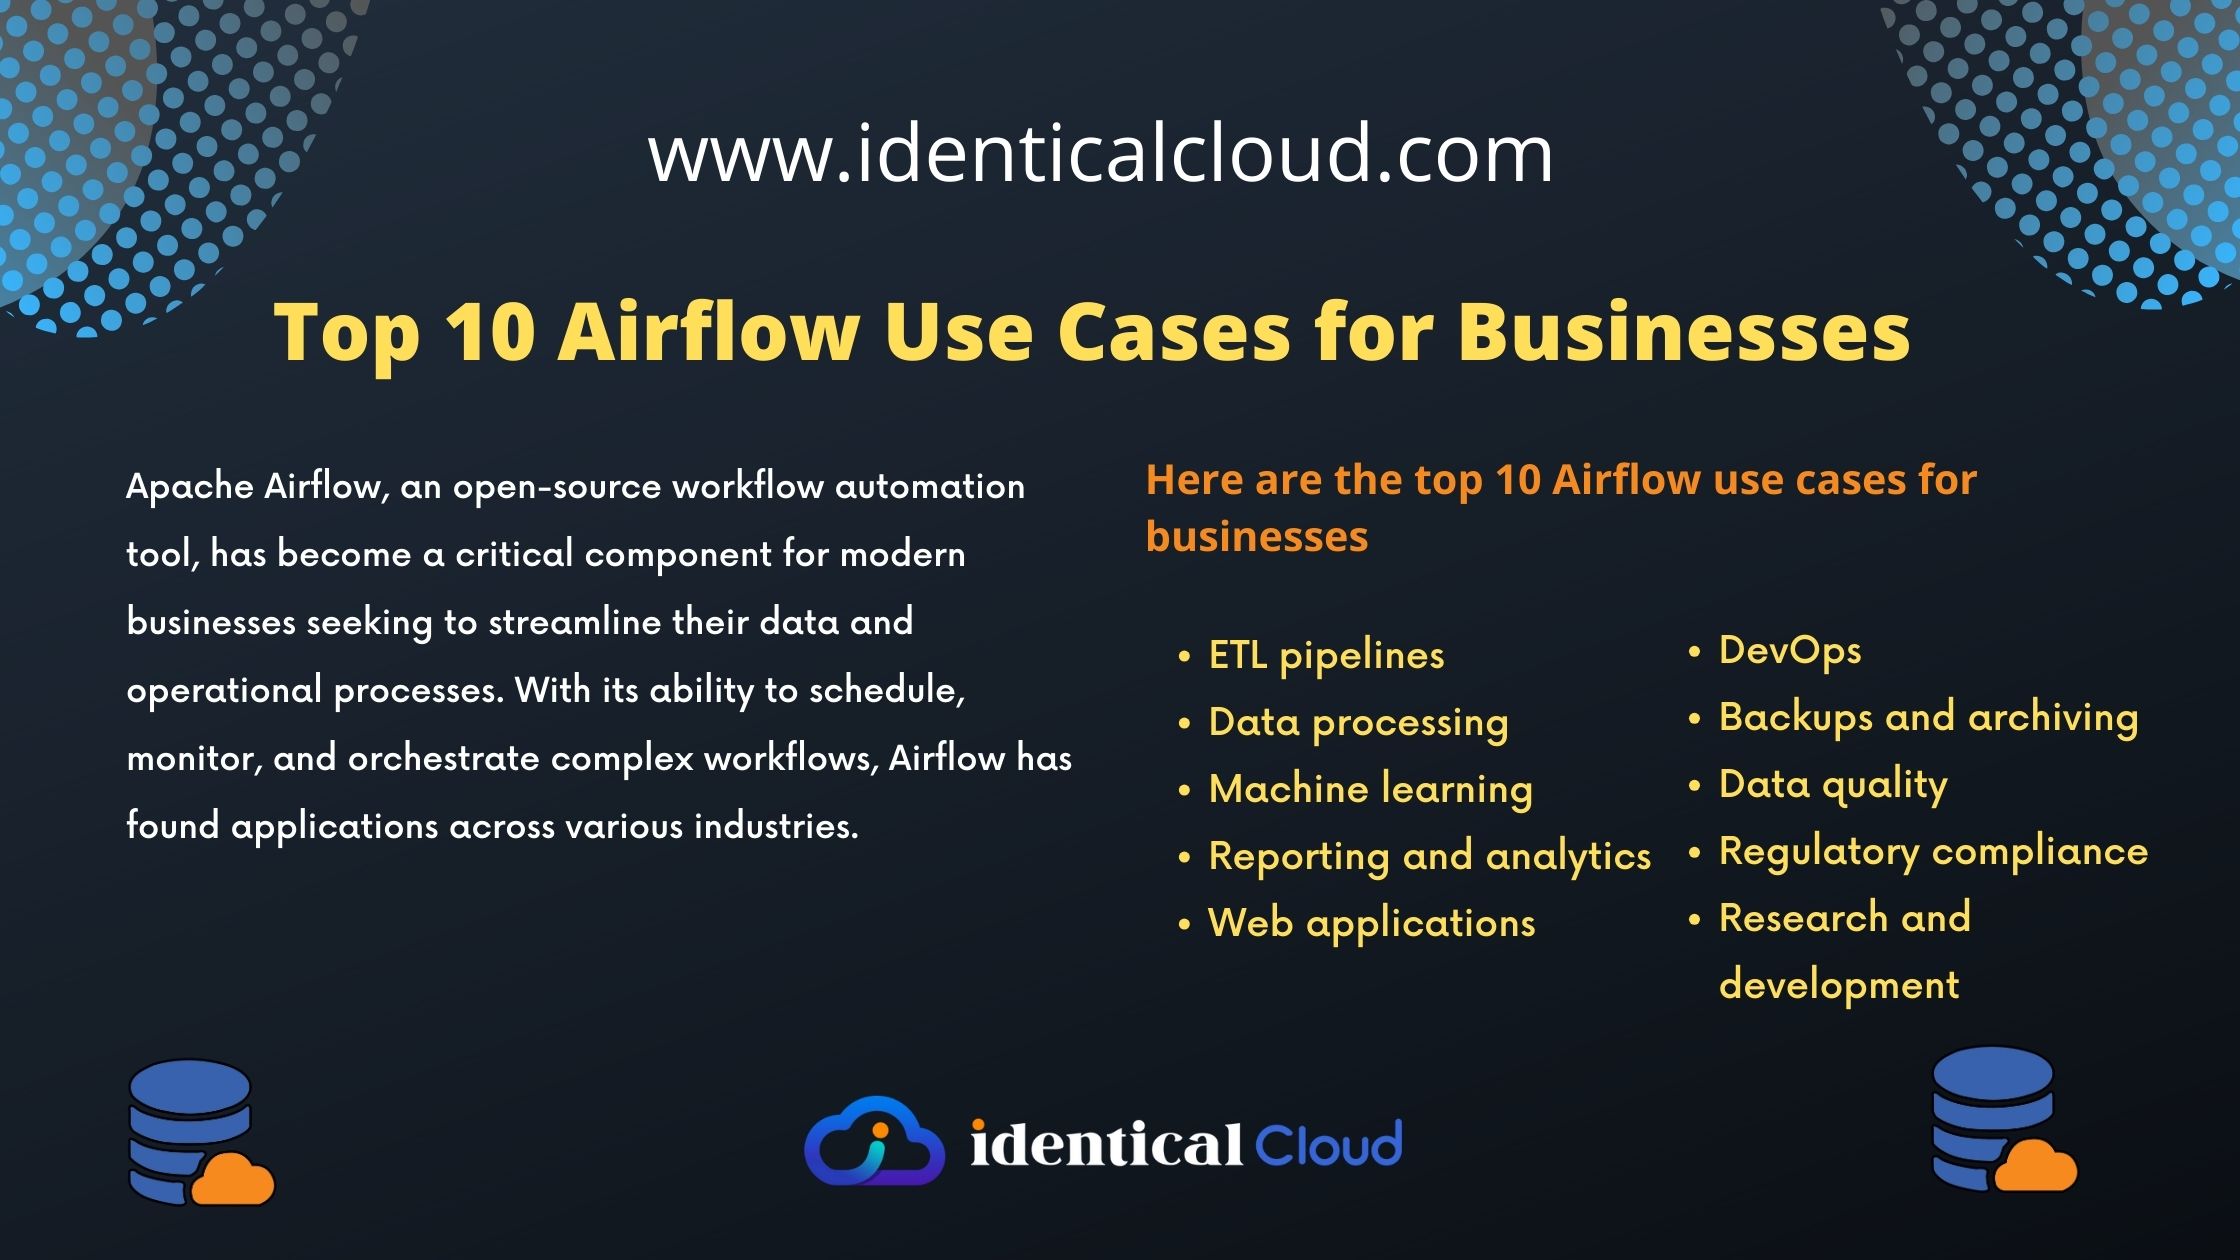 Top 10 Airflow Use Cases for Businesses - identicalcloud.com